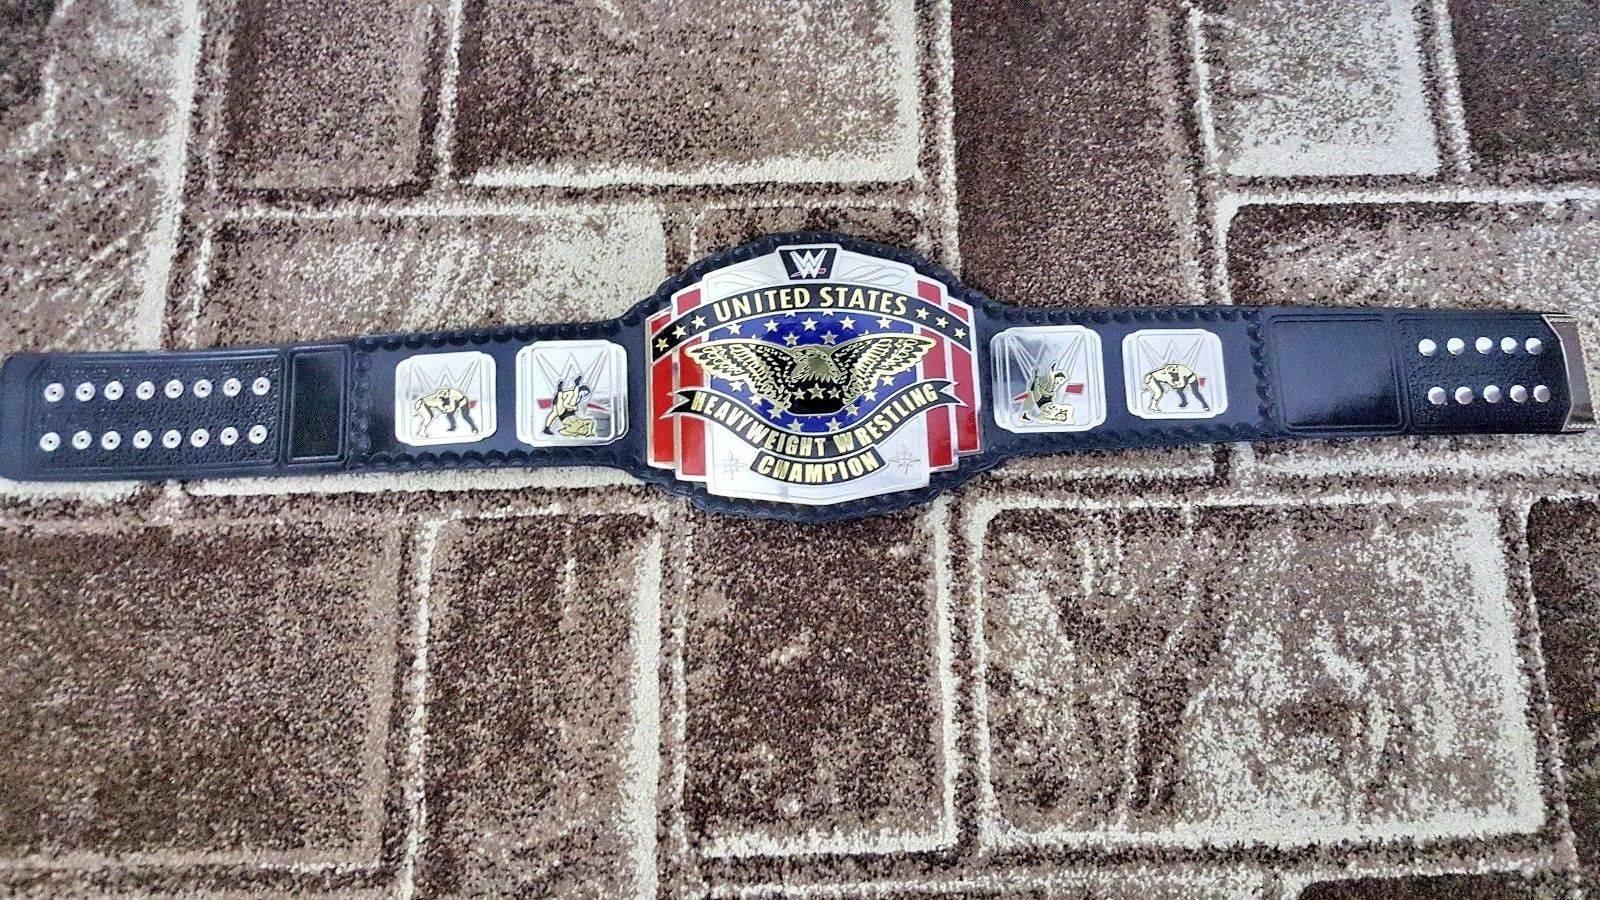 WWE UNITED STATES HEAVYWEIGHT Brass Championship Title Belt - Zees Belts